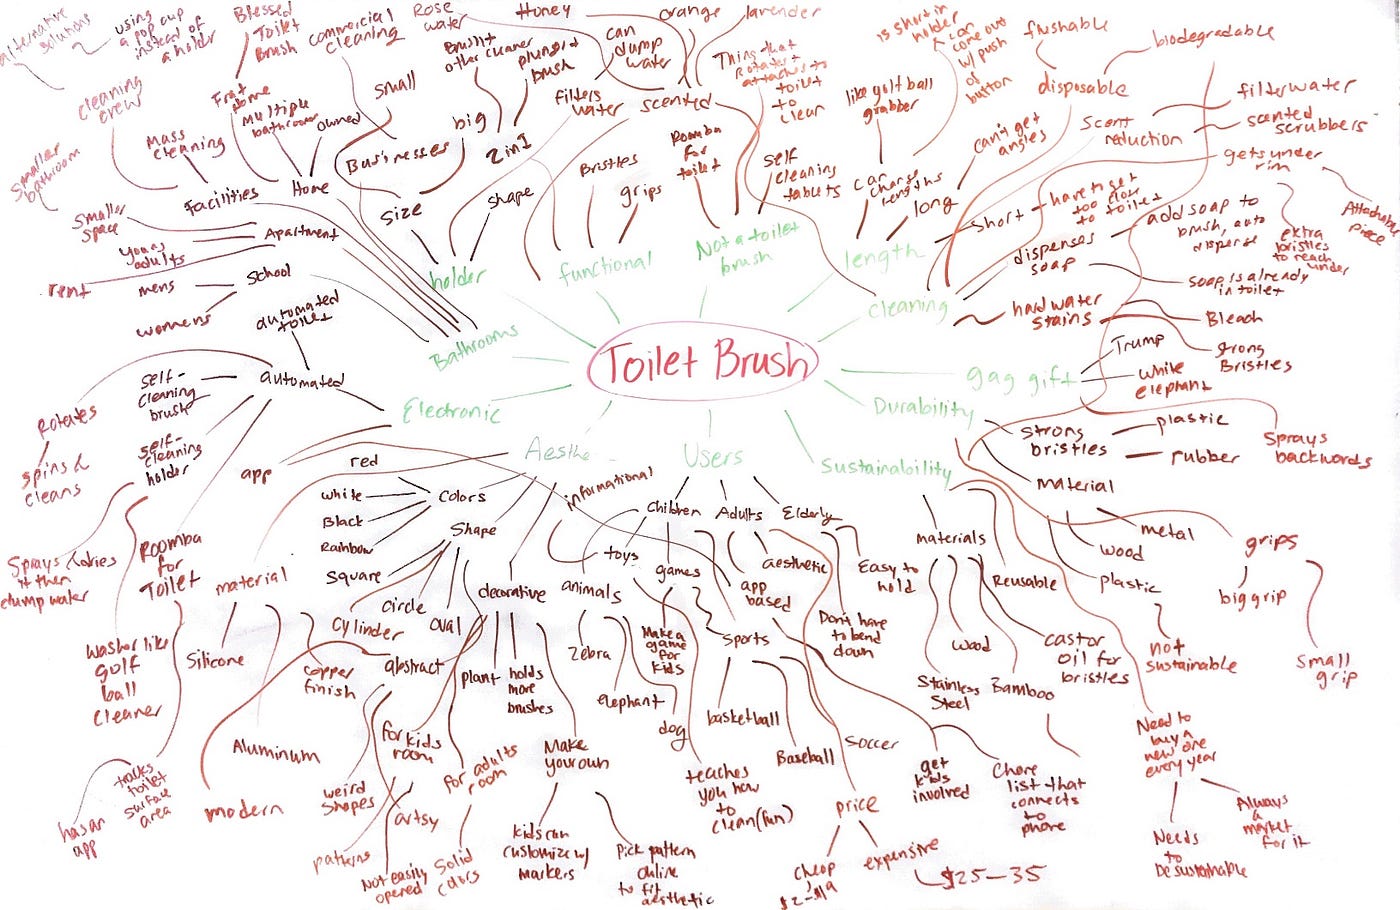 Idea Generation Part 1. Mind Map, by Sarah Gleason